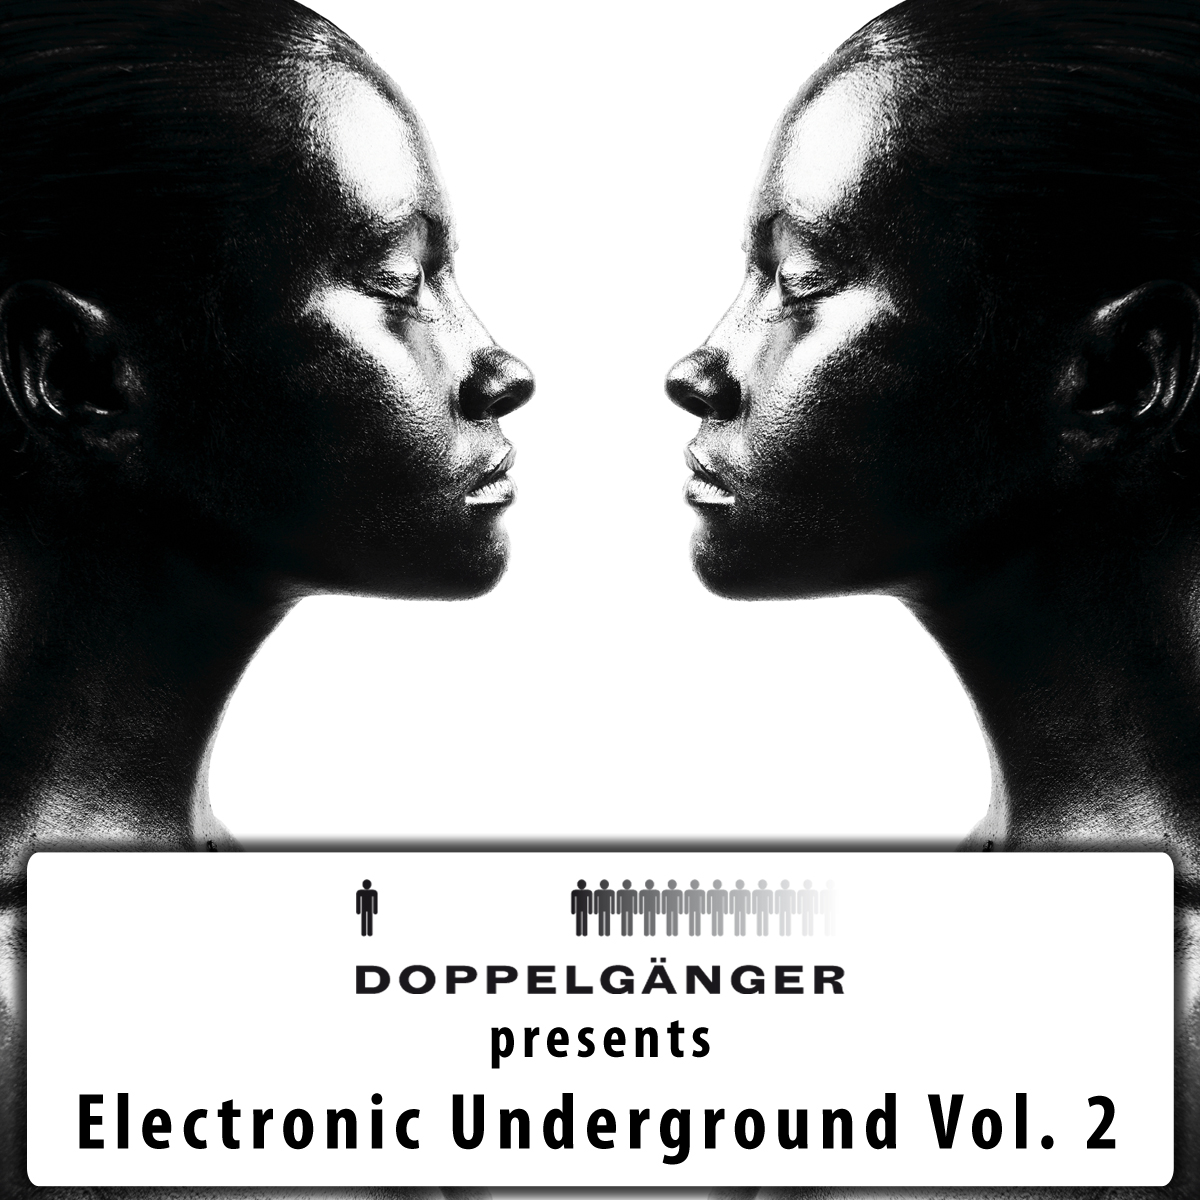 Doppelgänger pres. Electronic Underground Vol. 2